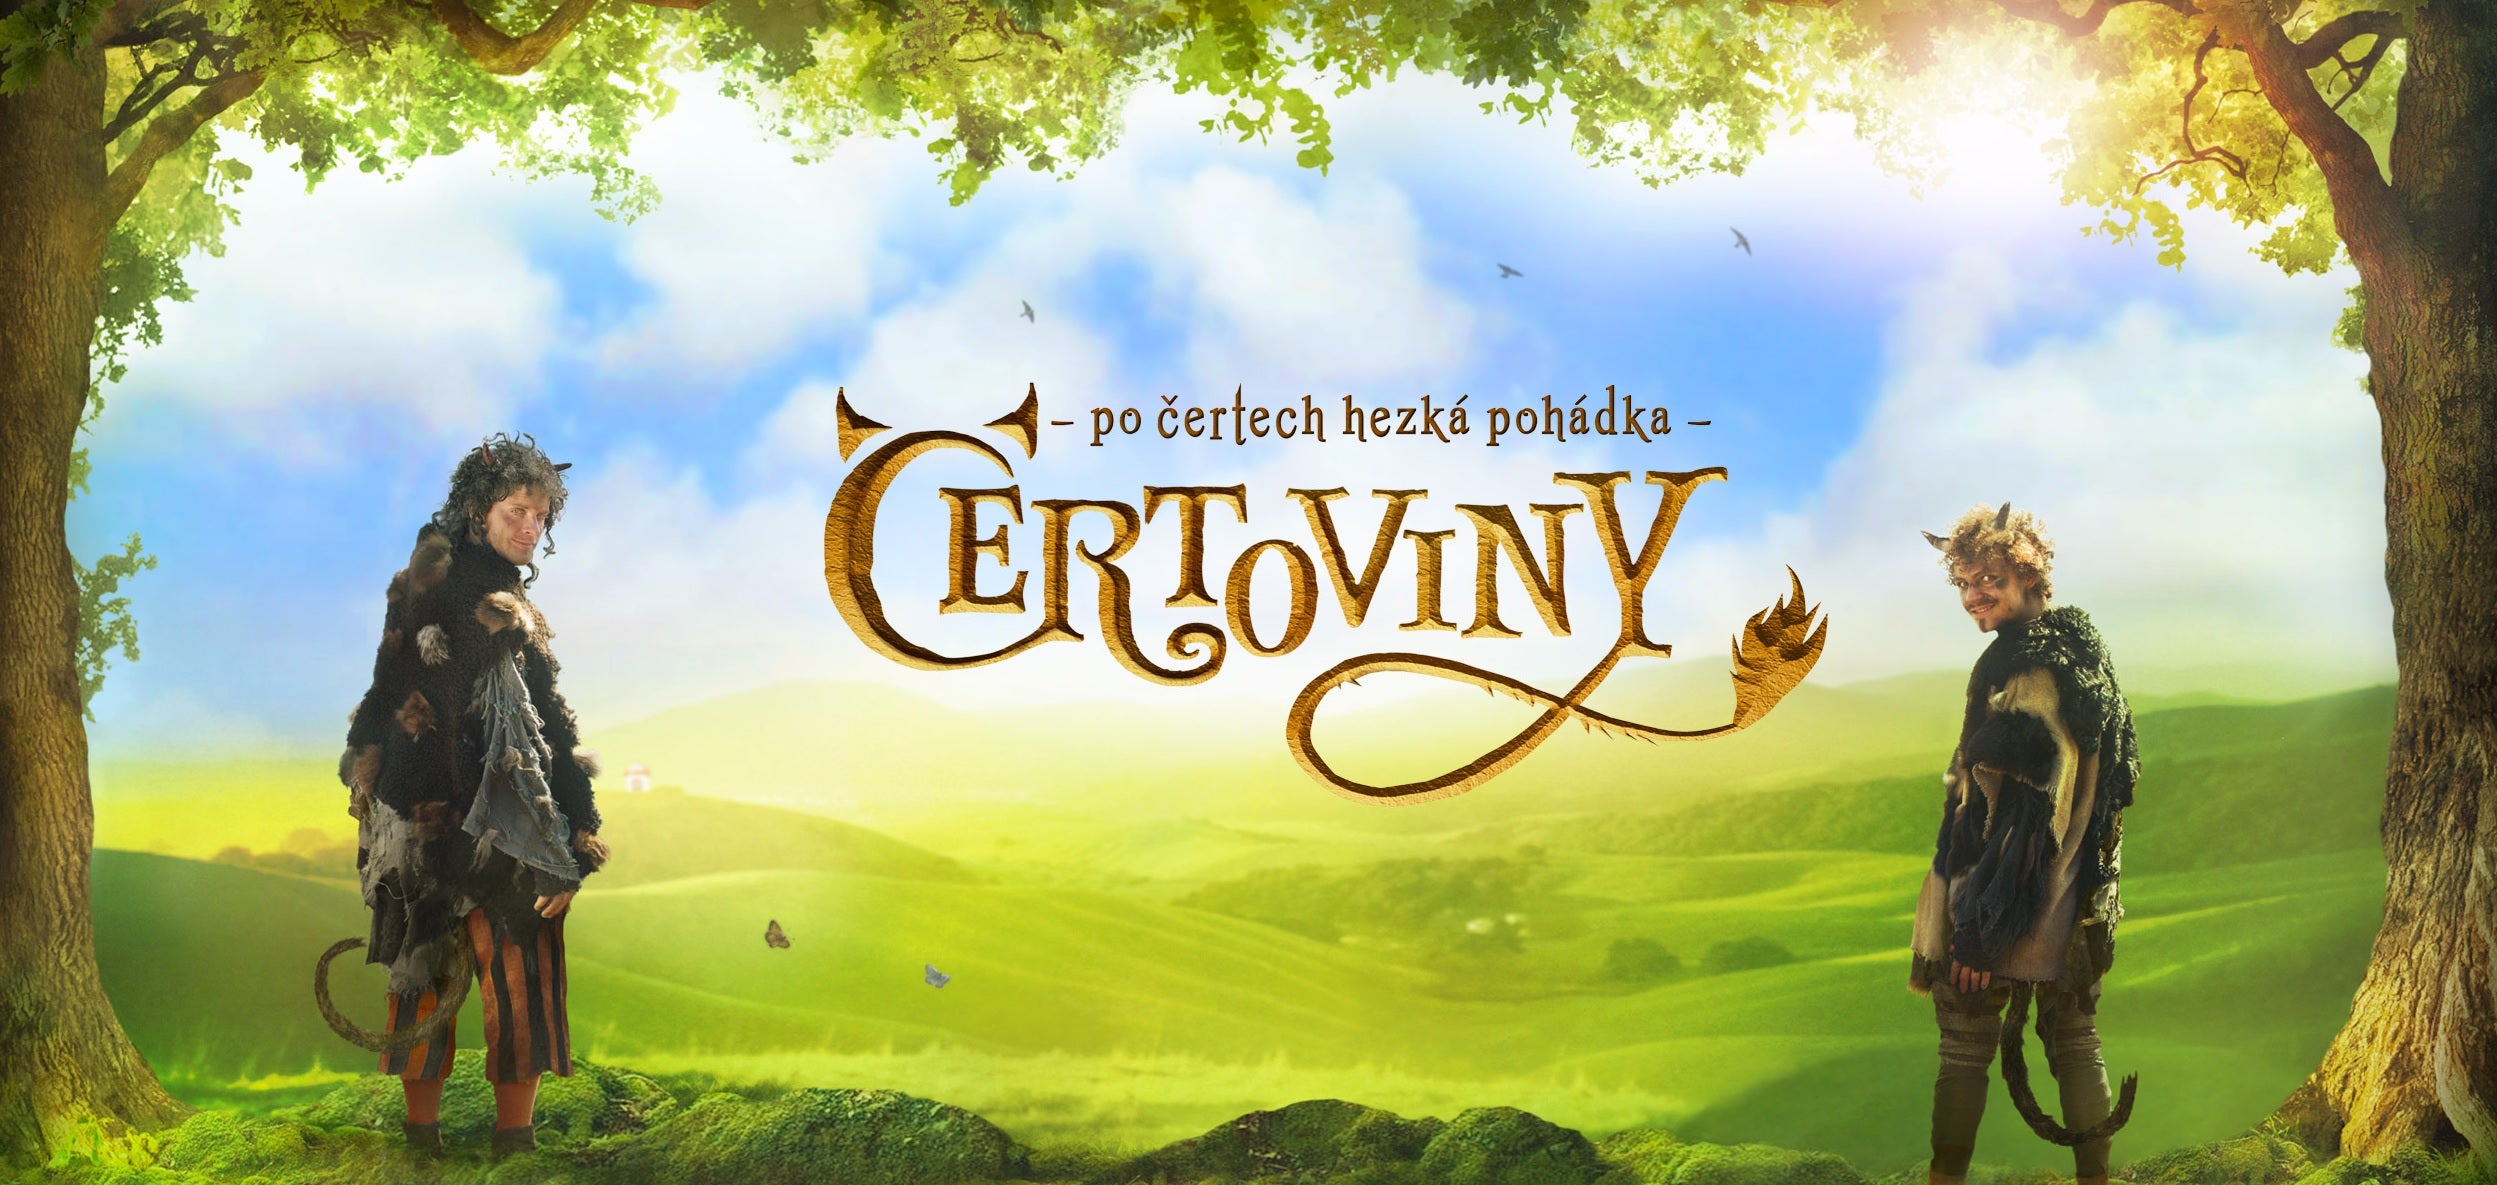 PURE DEVILRY ♥ Beautiful Czech Fairy-tale family movie on DVD !